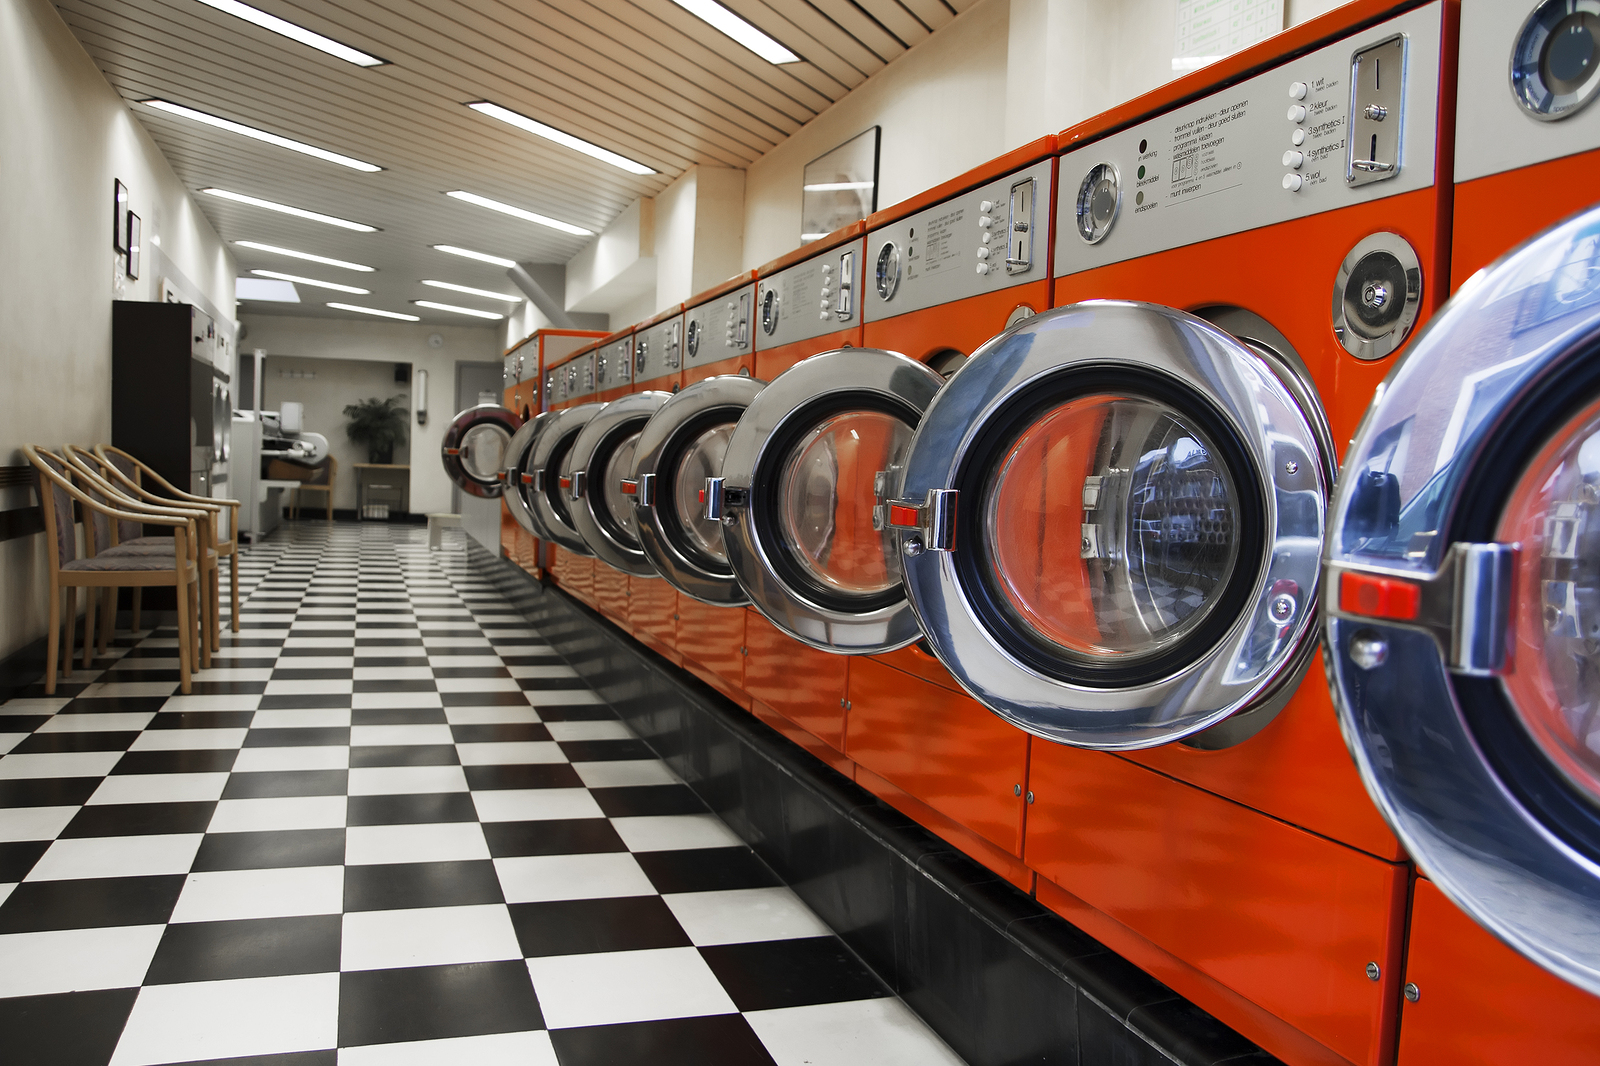 T L Equipment Sales Co Inc Commercial Laundry Equipment Experts